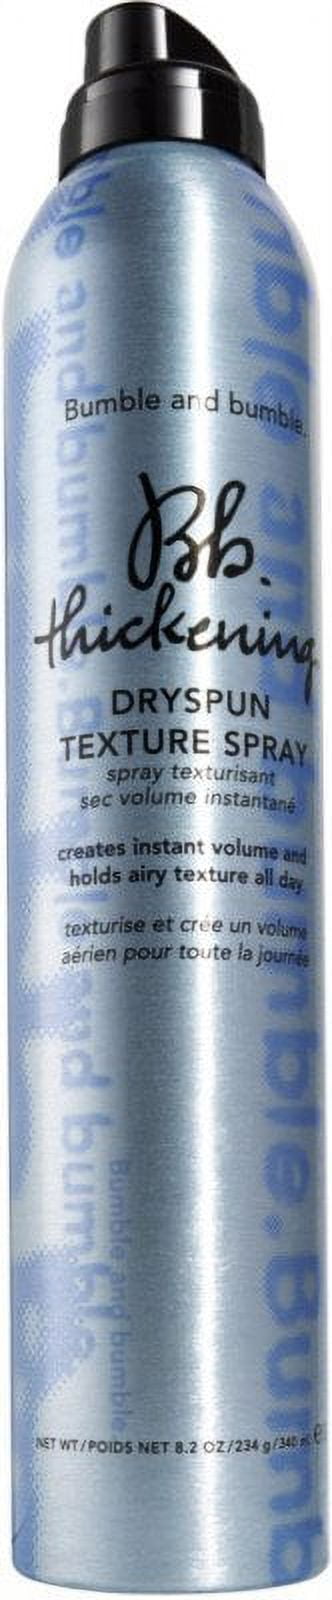 Bumble And Bumble Thickening Dryspun Texture Spray